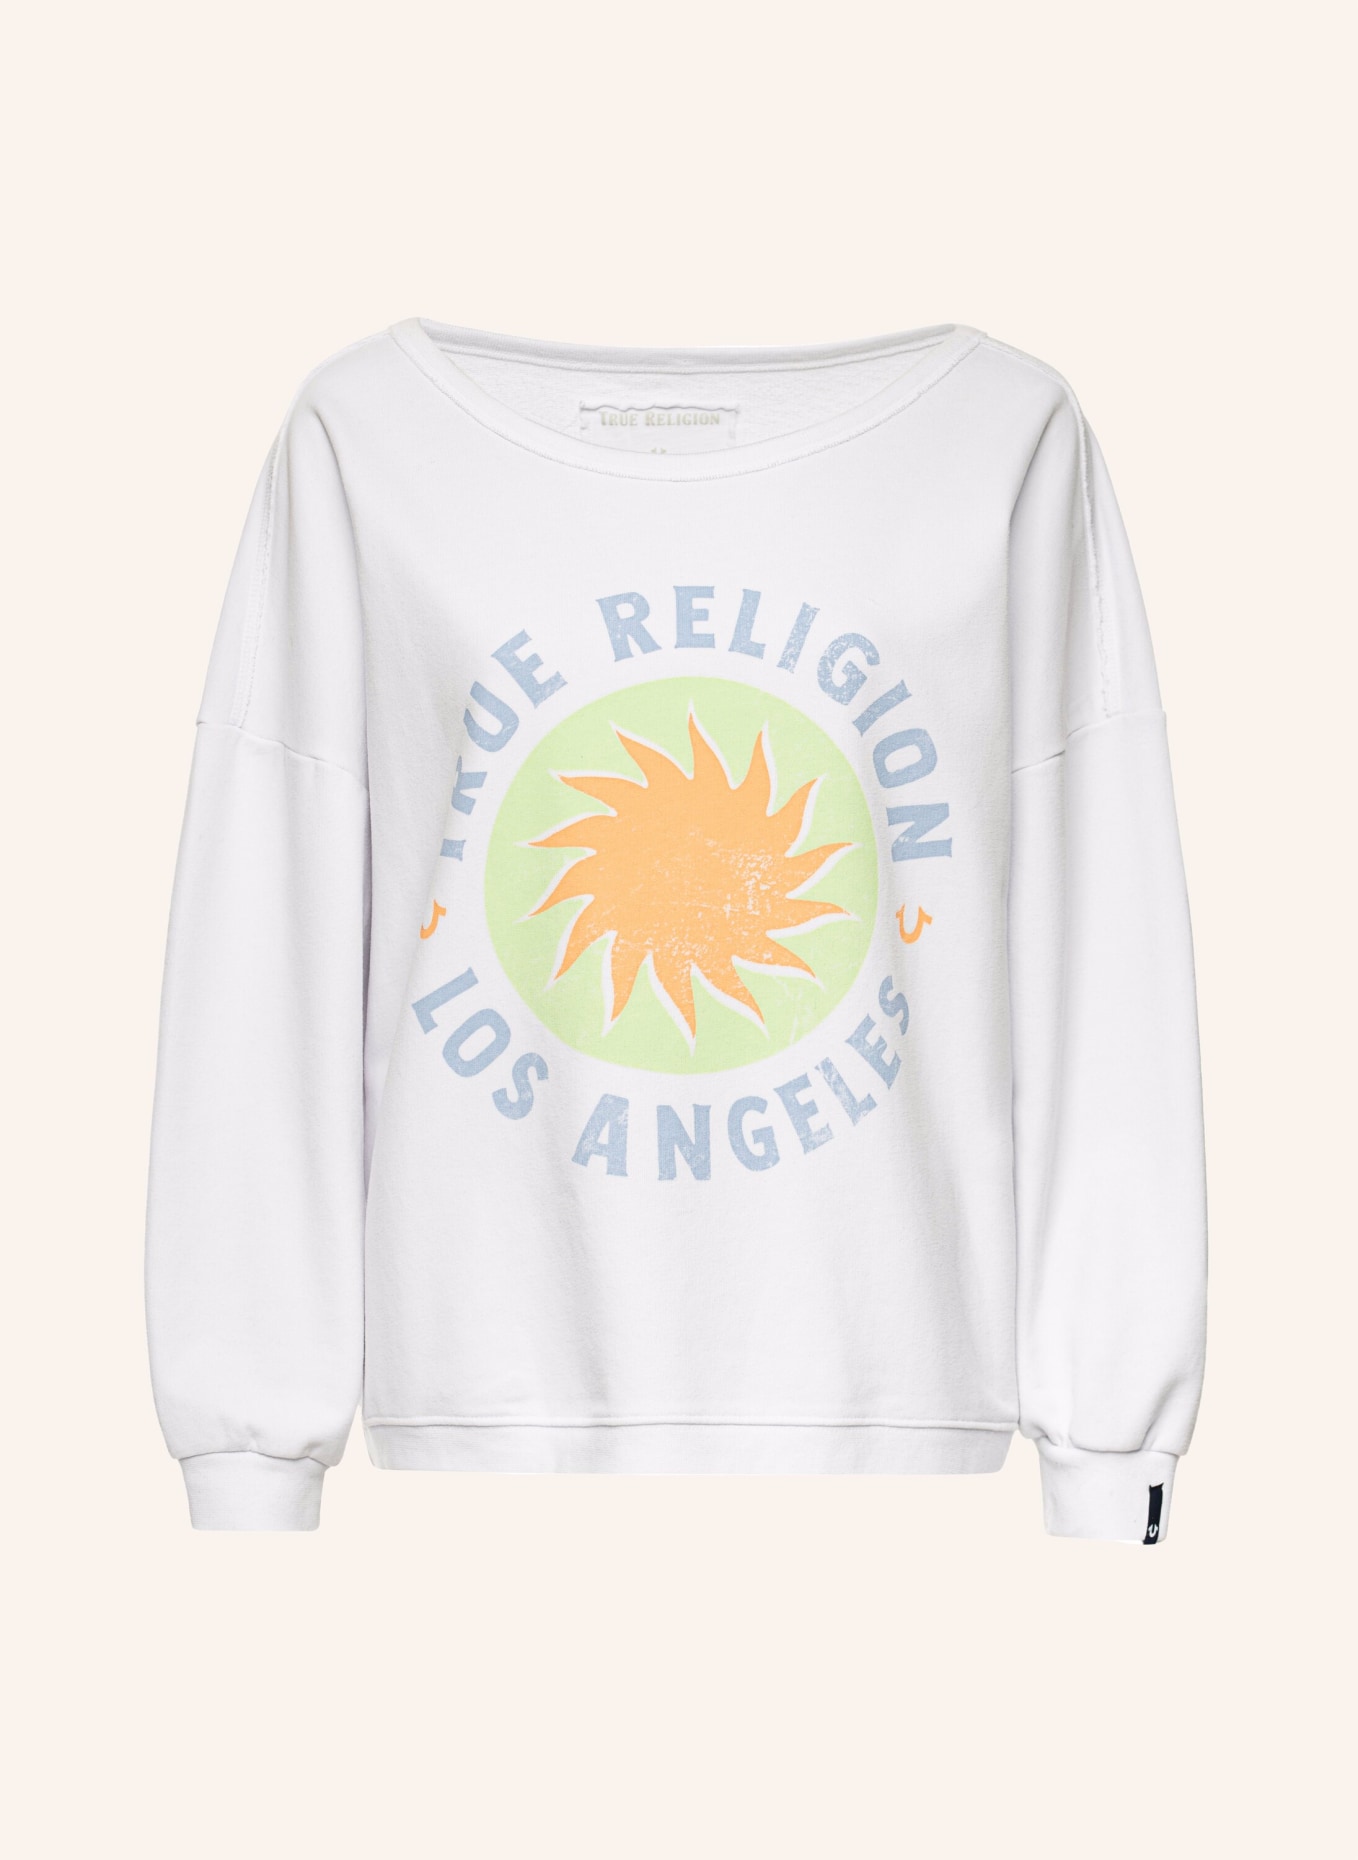 TRUE RELIGION Sweatshirt LOS ANGELES SUN, Farbe: WEISS (Bild 1)